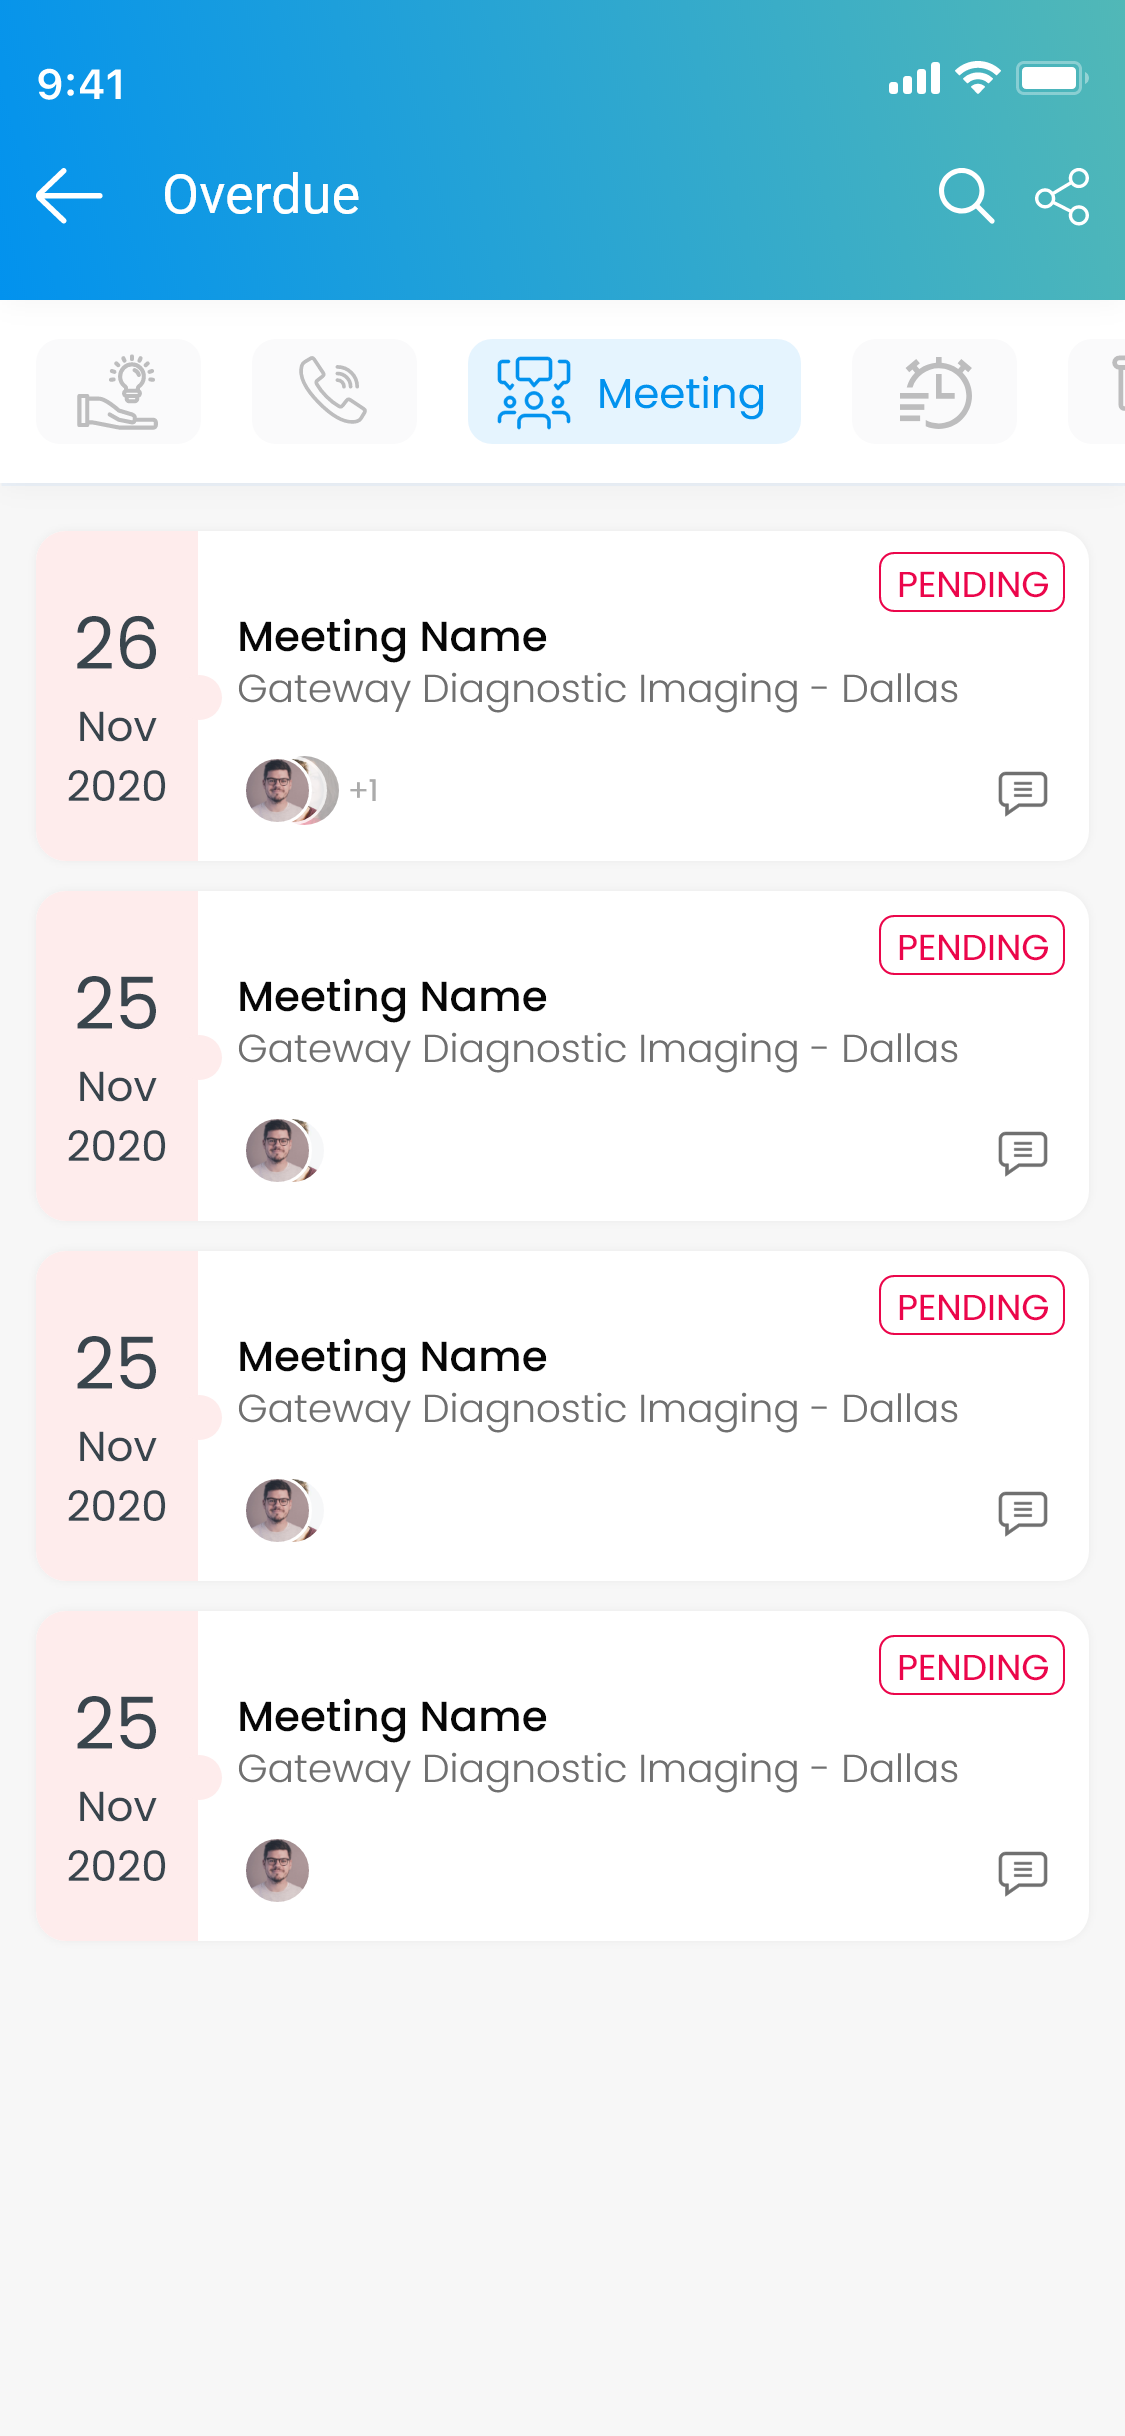 10 Overdue - Meeting